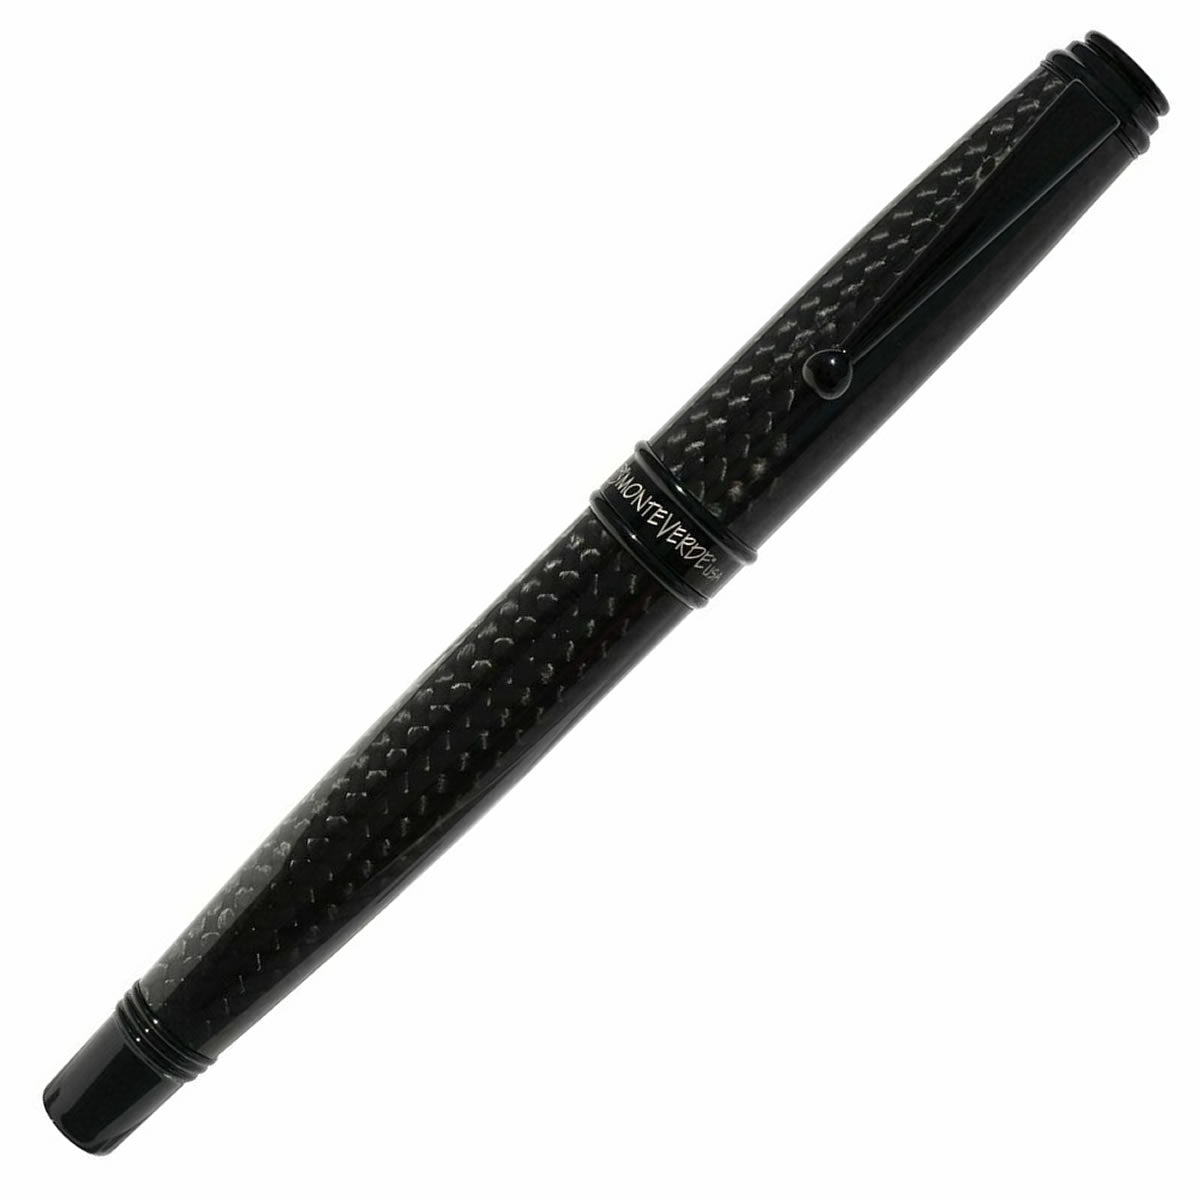 Monteverde Invincia Deluxe Black Carbon Fibre Fountain Pen